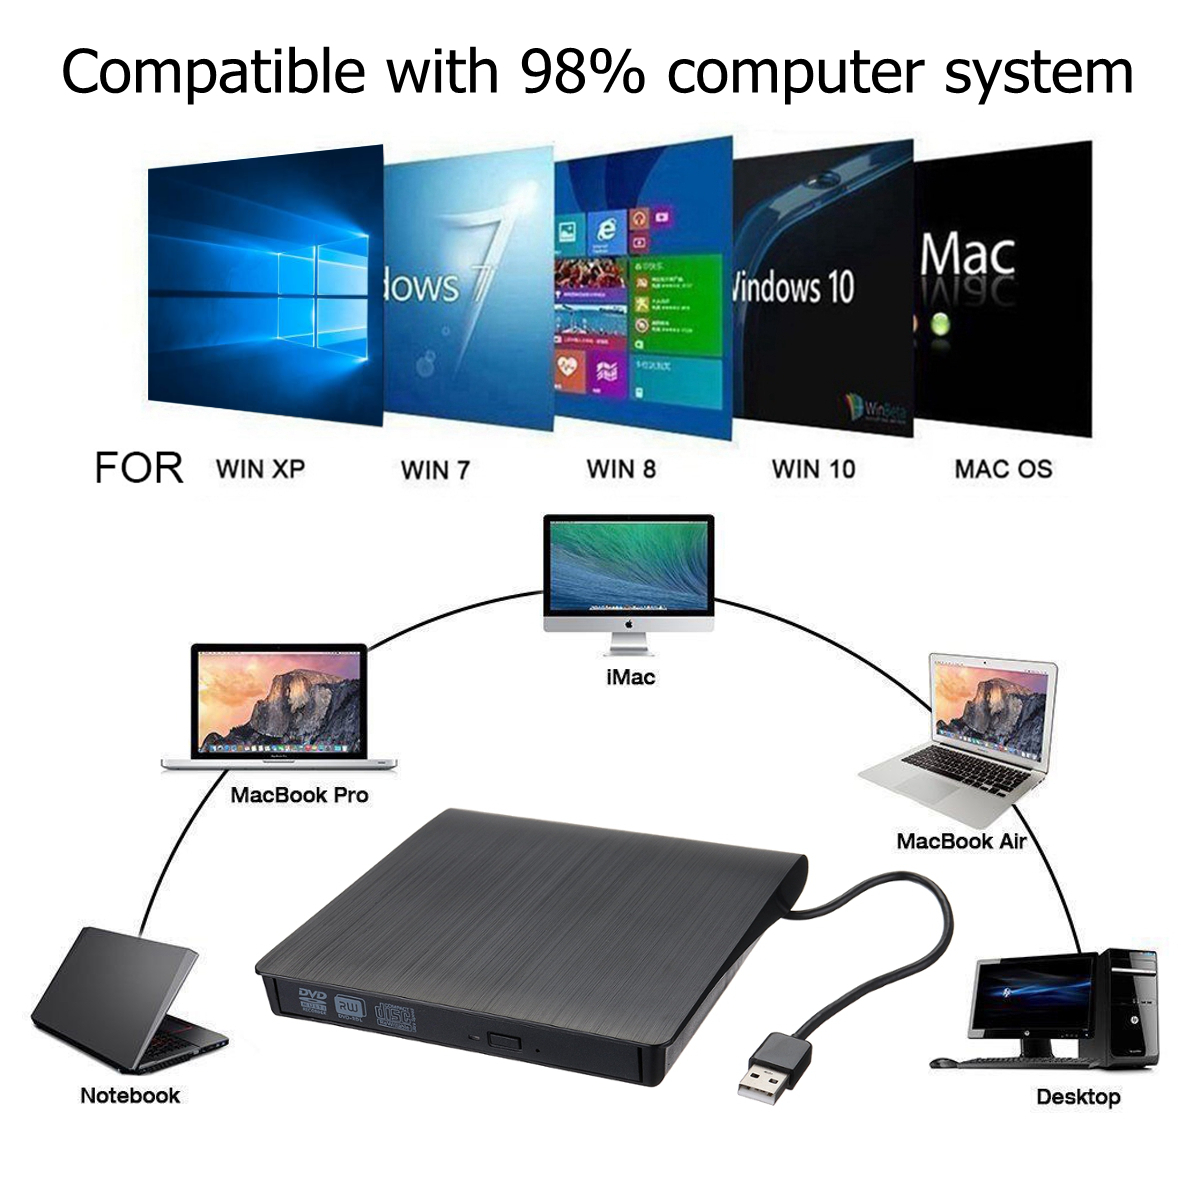 External-USB-20-DVD-RW-CD-Writer-Slim-Optical-Drive-Burner-Reader-Player-For-PC-Laptop-Business-Offi-1535879-2